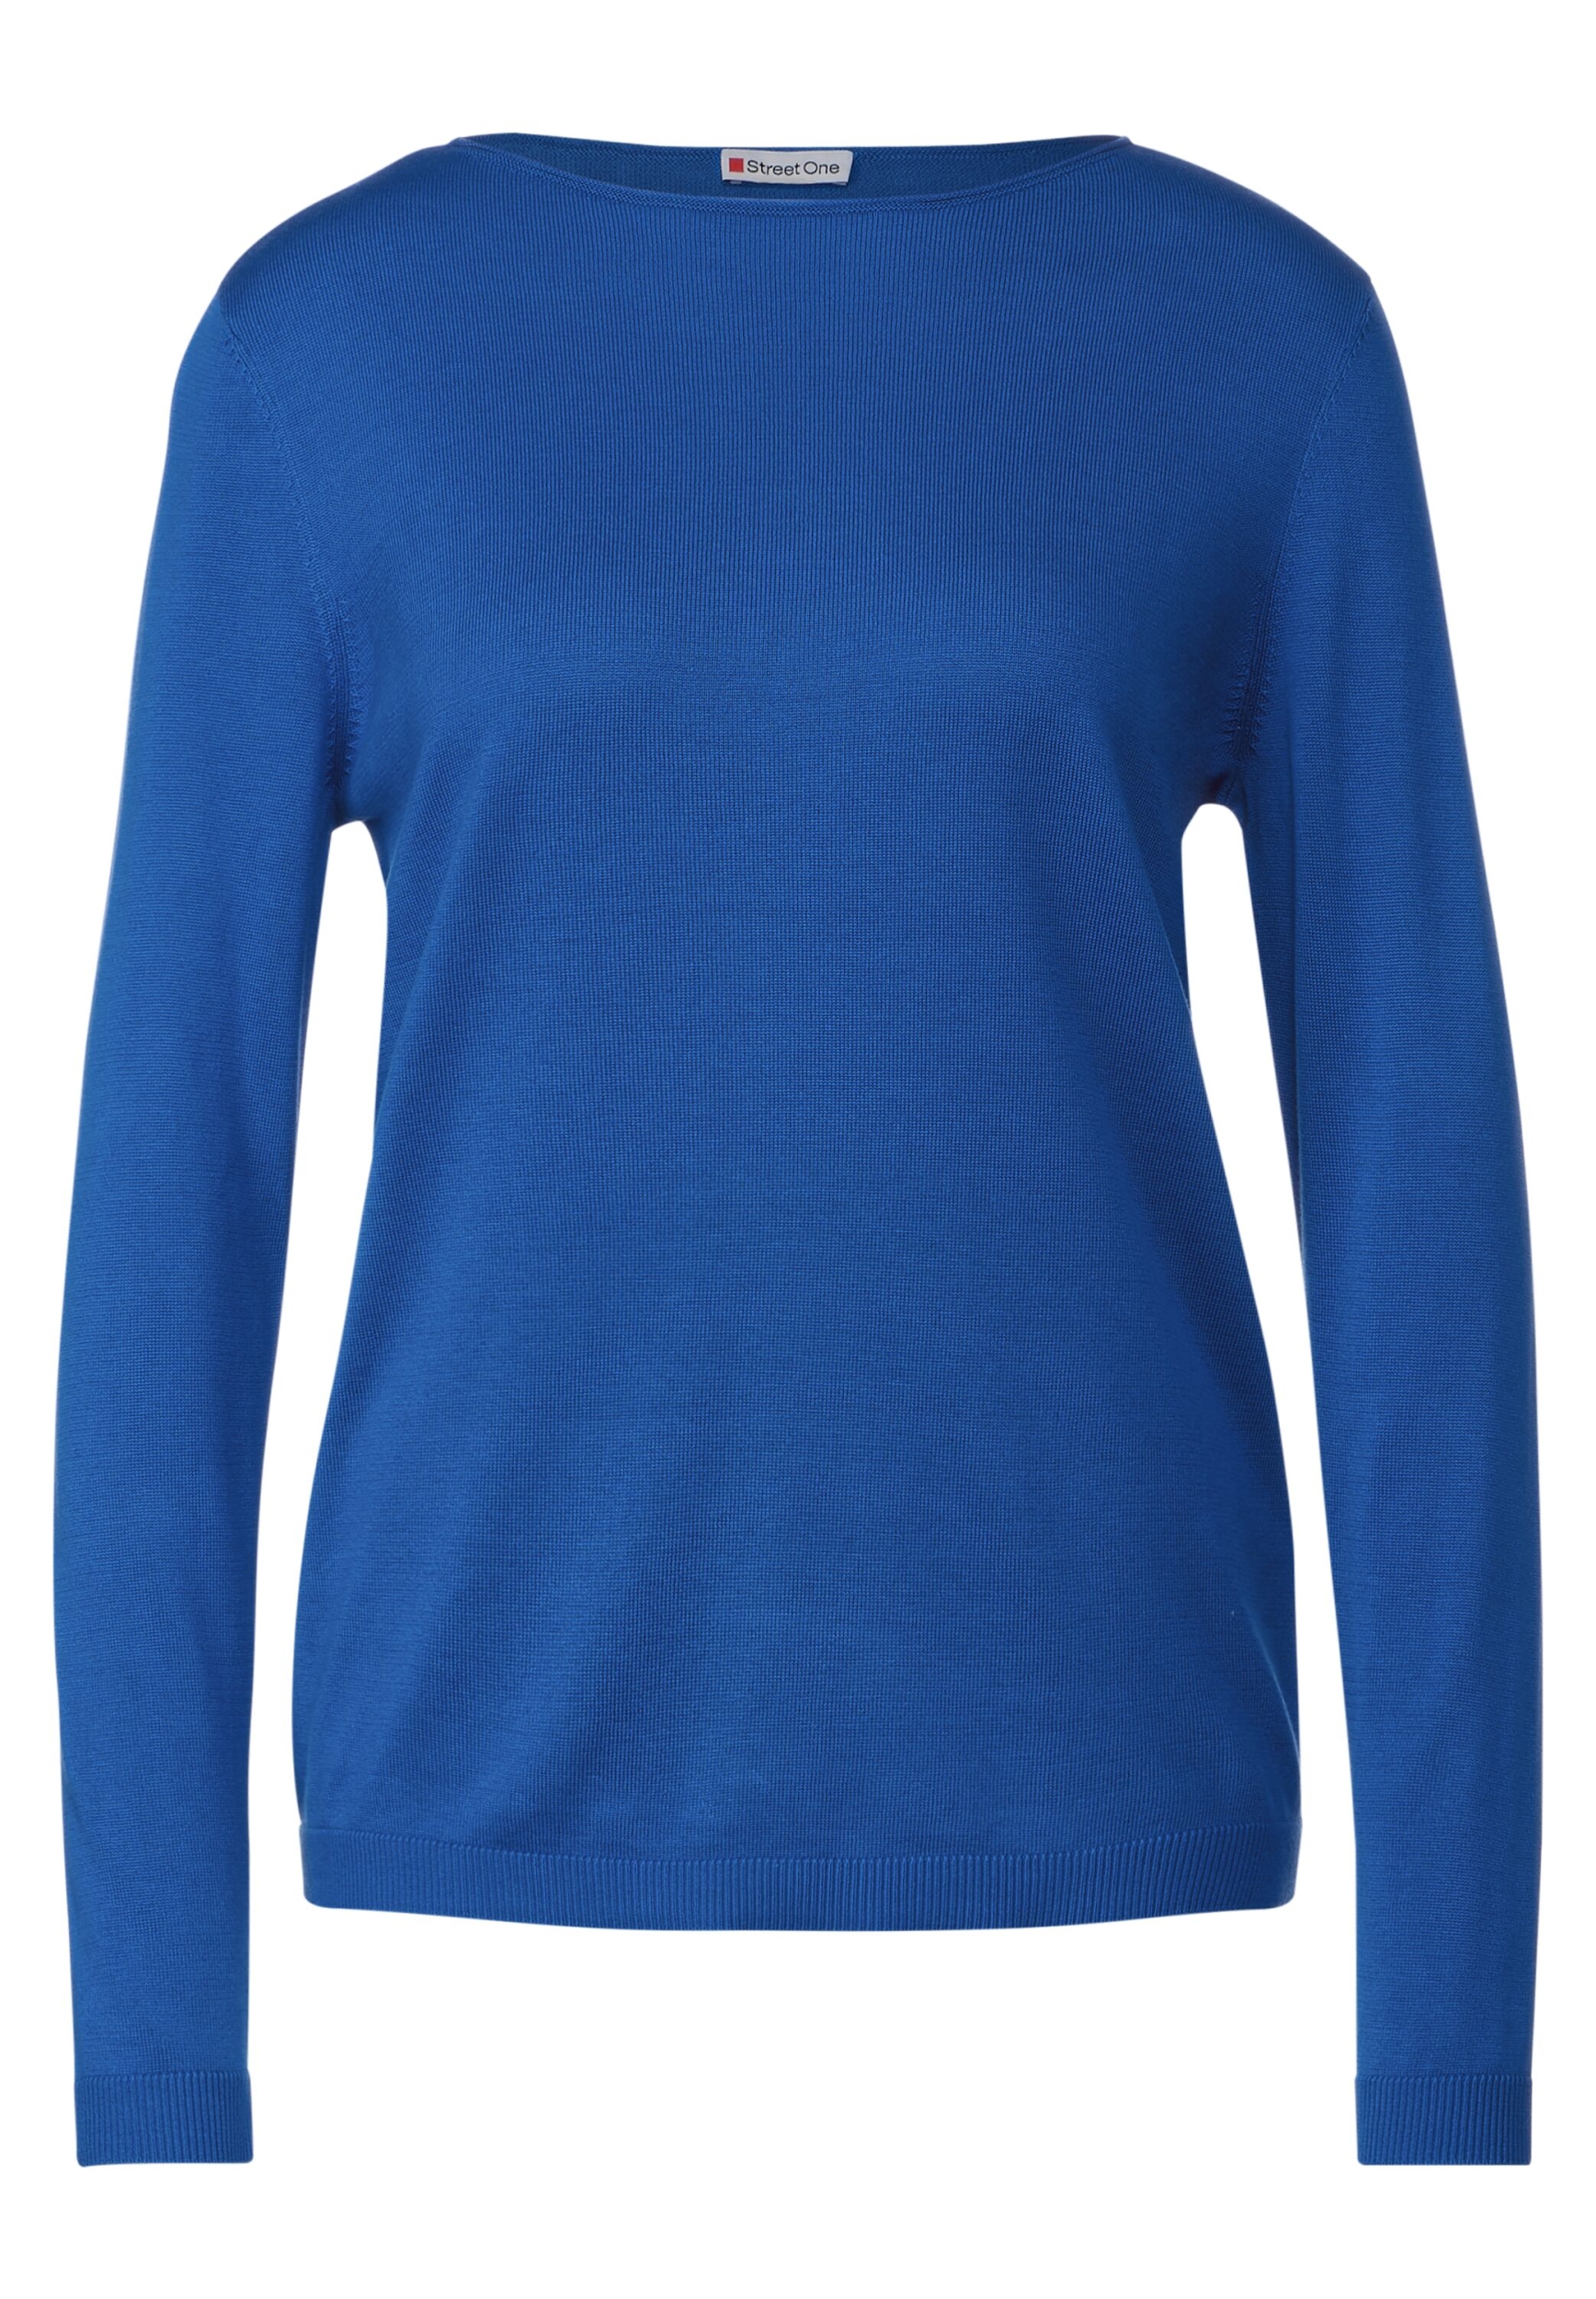 LTD QR basic u-boat sweater | 34 | fresh intense gentle blue |  A302548-15377-34